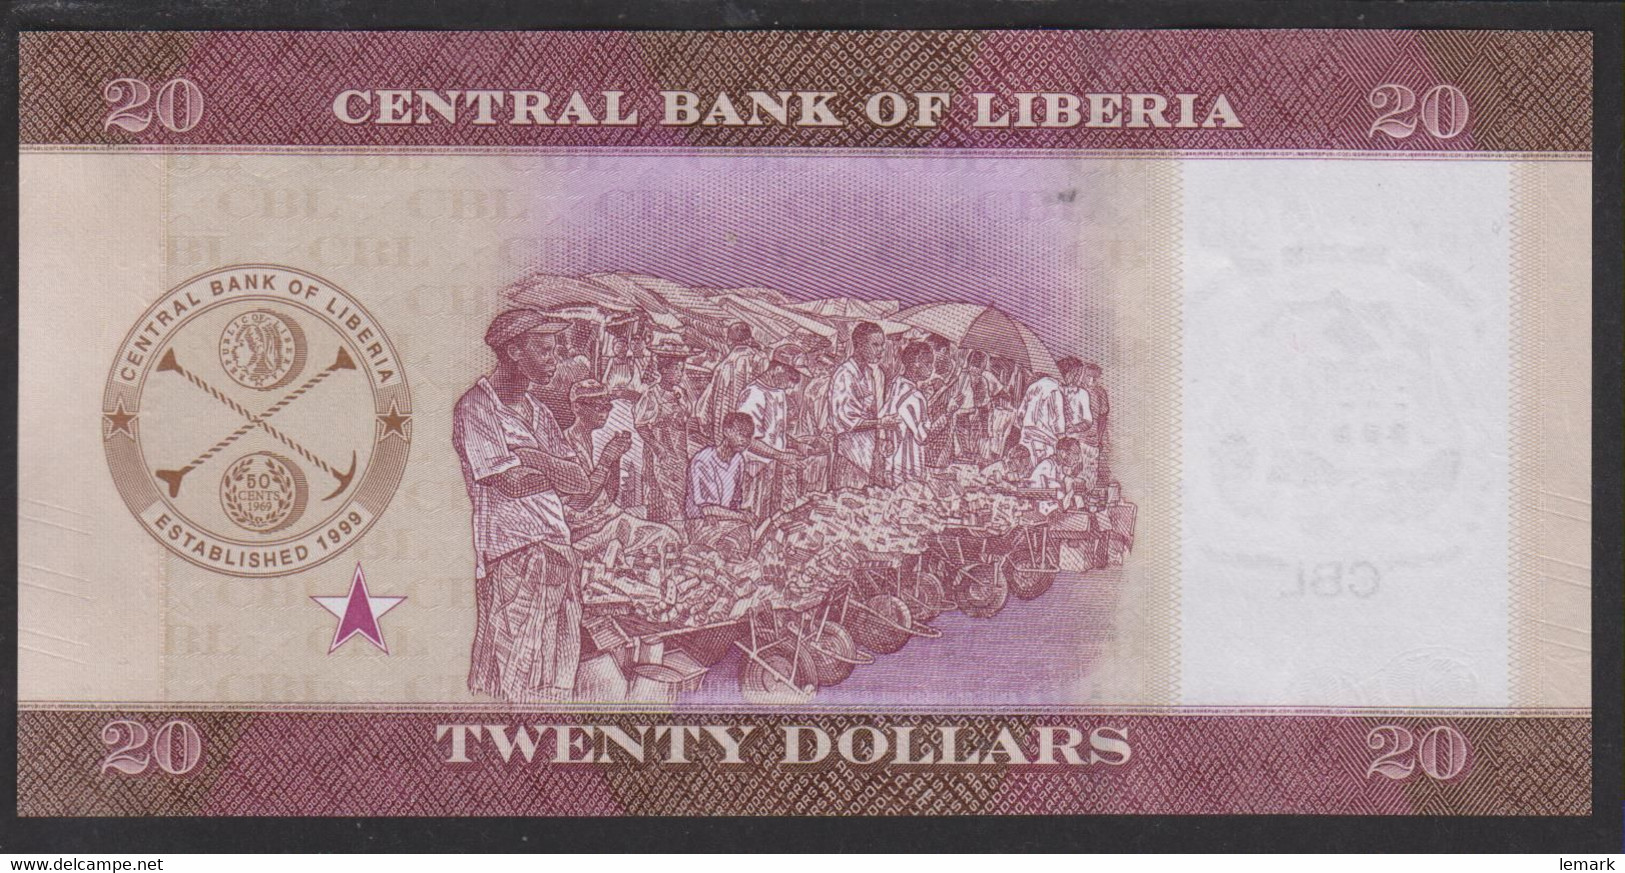 Liberia 20 Dollar 2022 P39 UNC - Liberia